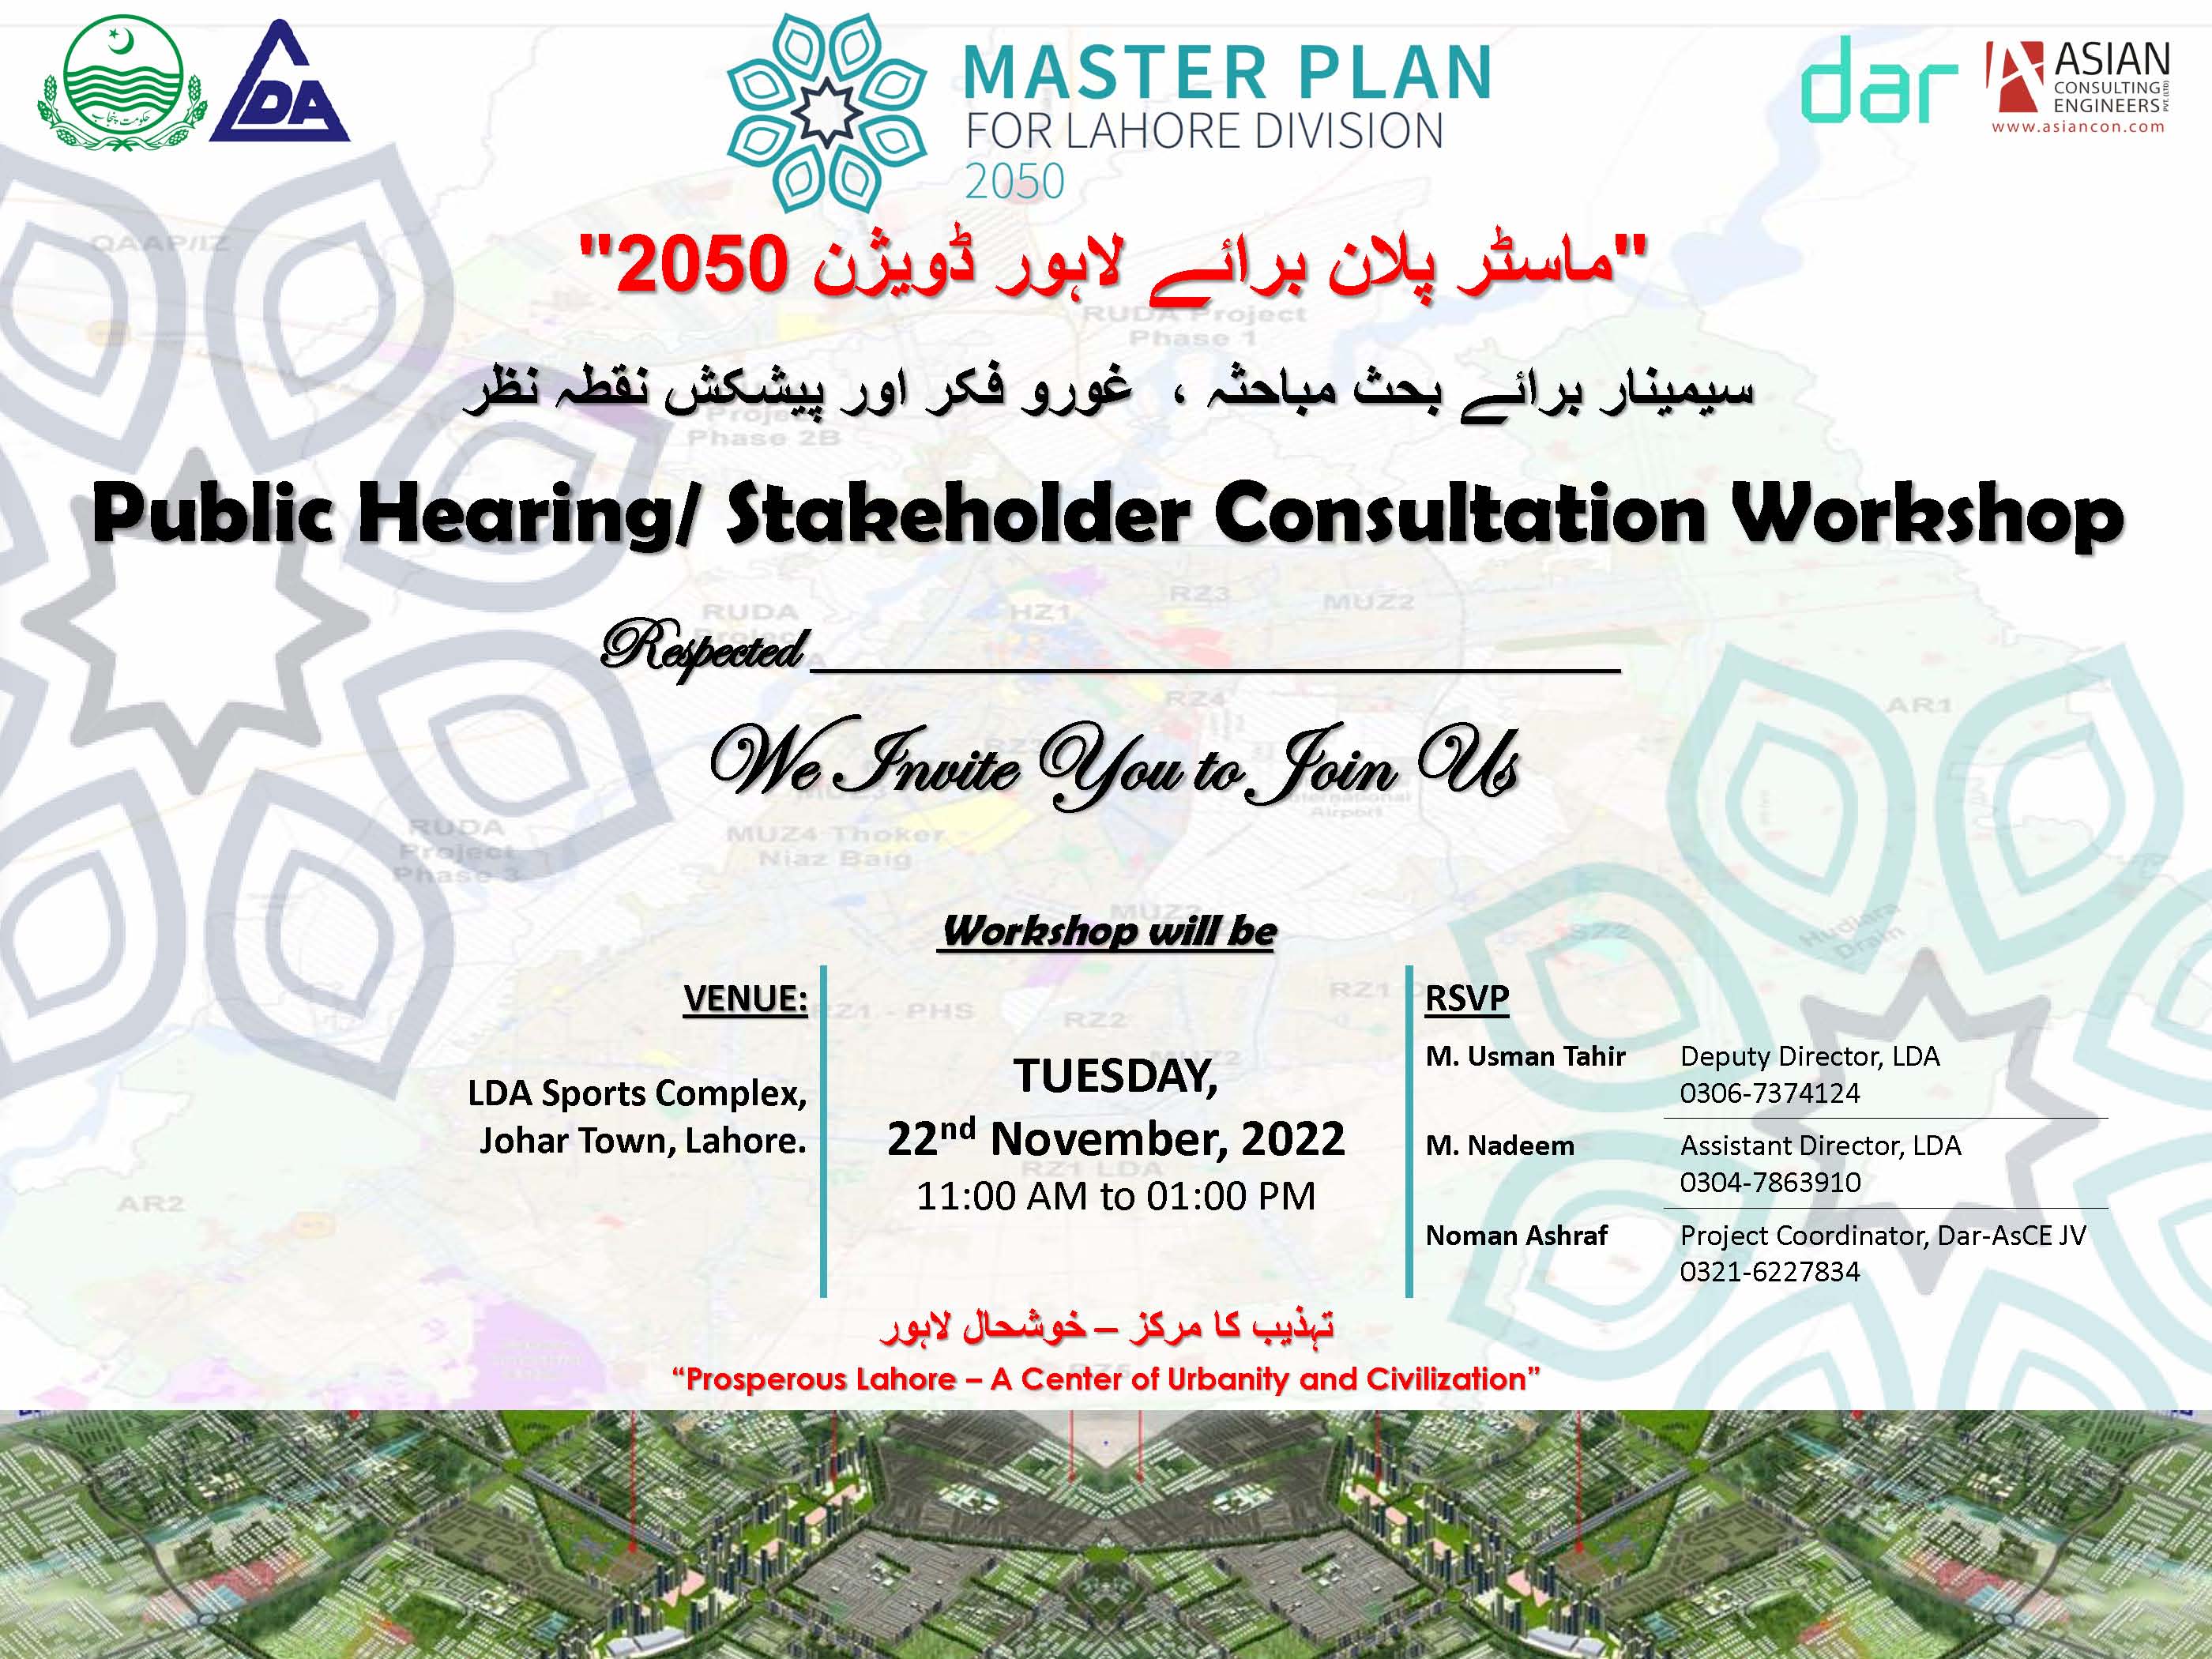 public hearing / stakeholder consultation